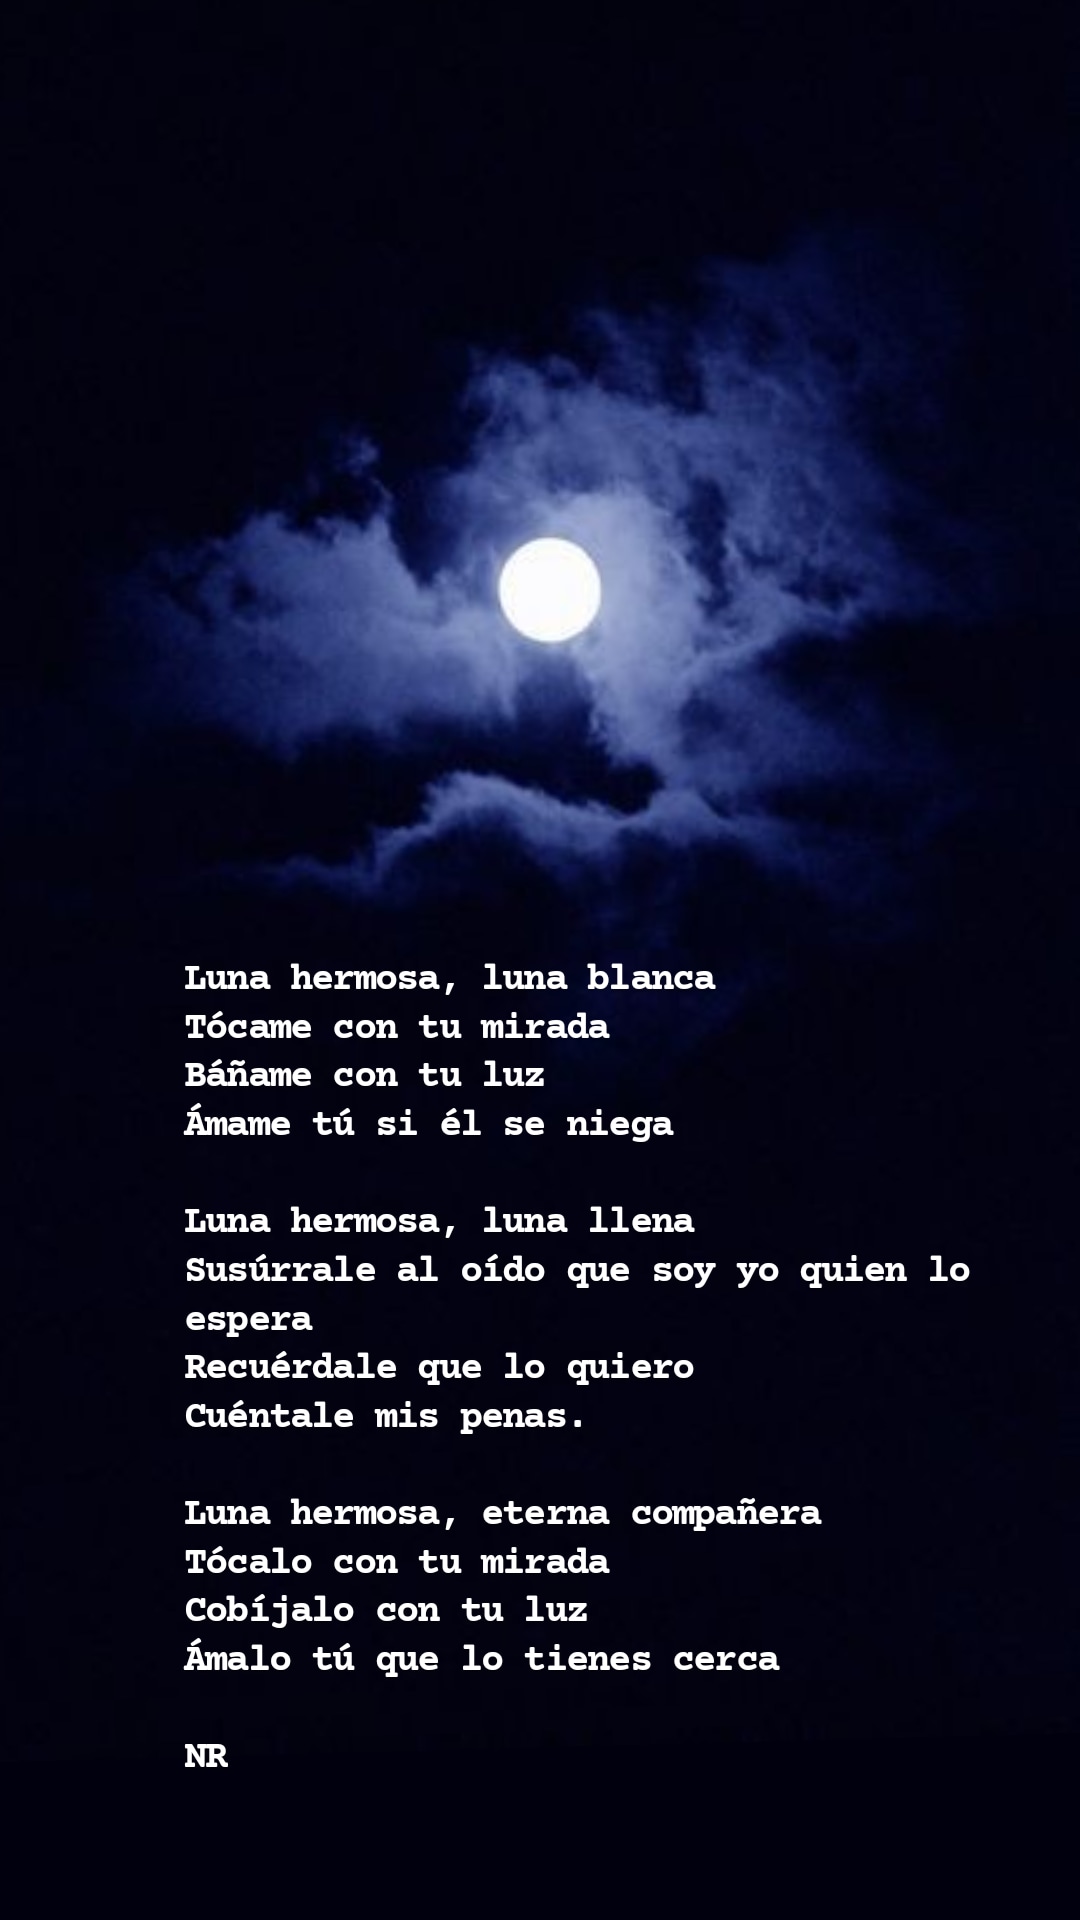 Gran roble subasta microscópico ɴᴇʟɪᴛᴀ 🎄🎅🤶 på Twitter: "Hermosa luna llena. #luna #poesia #rimas #versos  #escritora https://t.co/QXz4KpT68T" / Twitter